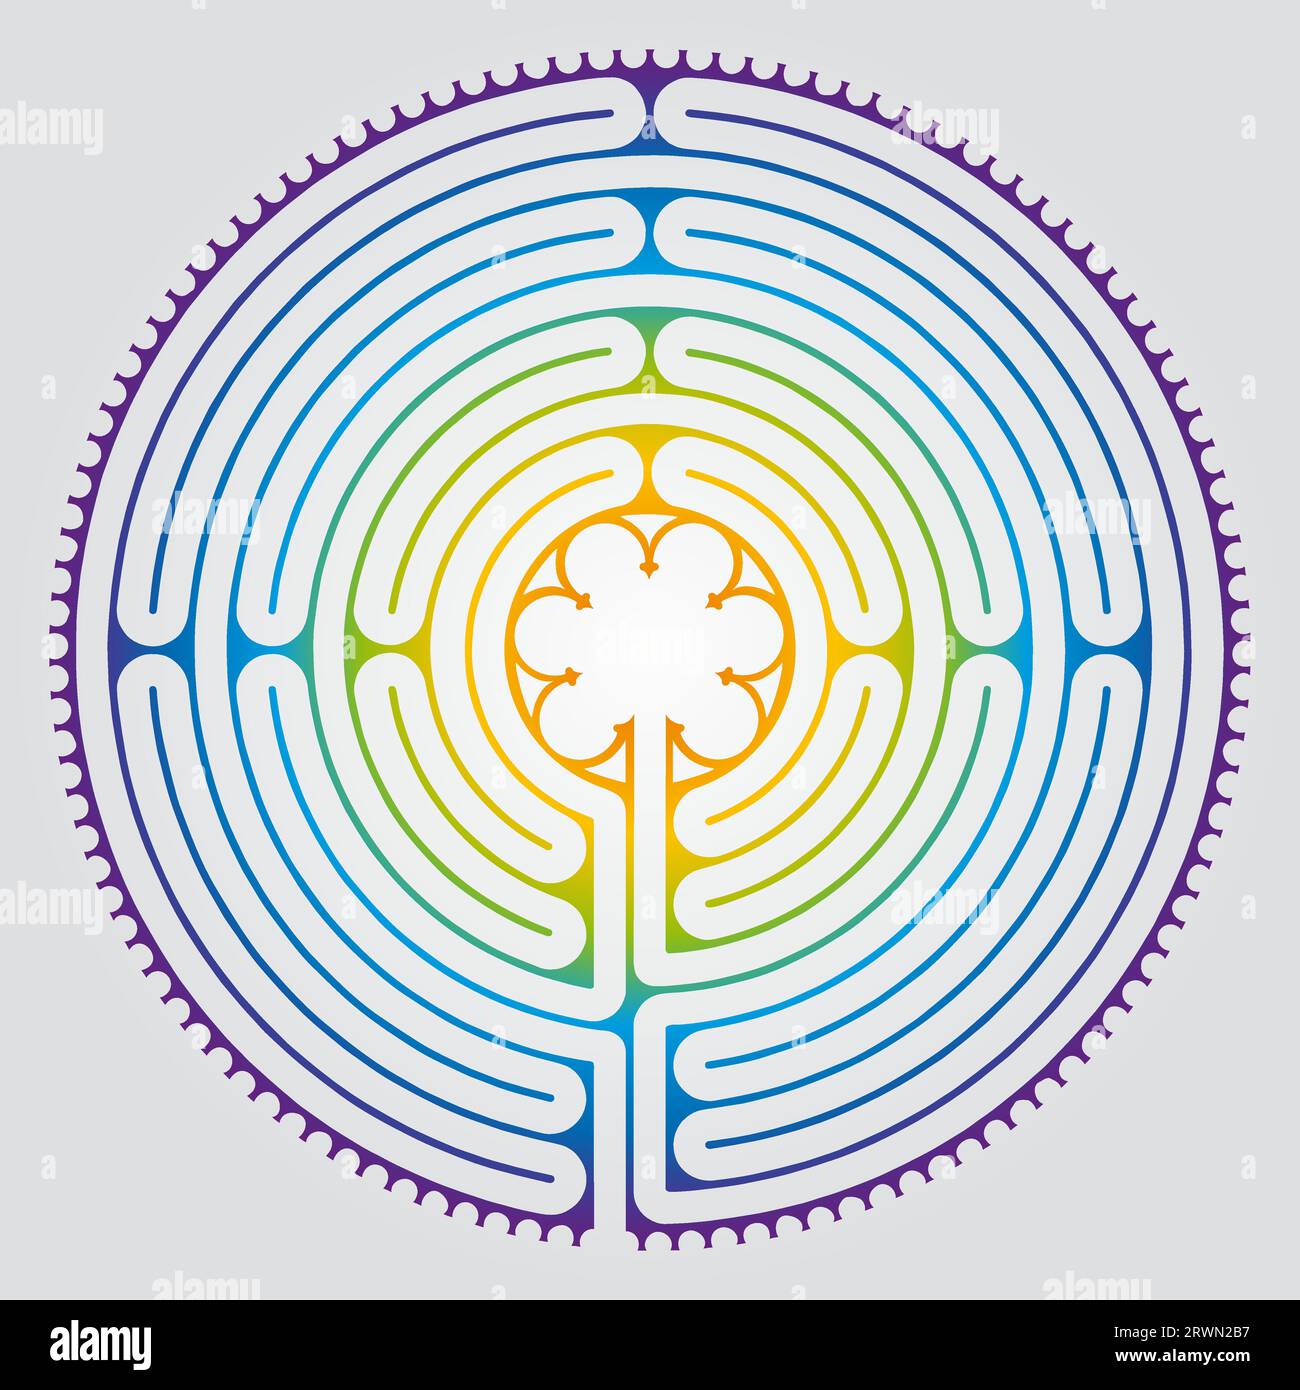 Labyrinth Kathedrale von Chartres Illustration Vektor - Symbolismus Meditationsgeschichte - Blumenmotiv - Heilige Geometrie Regenbogenfarben Stock Vektor